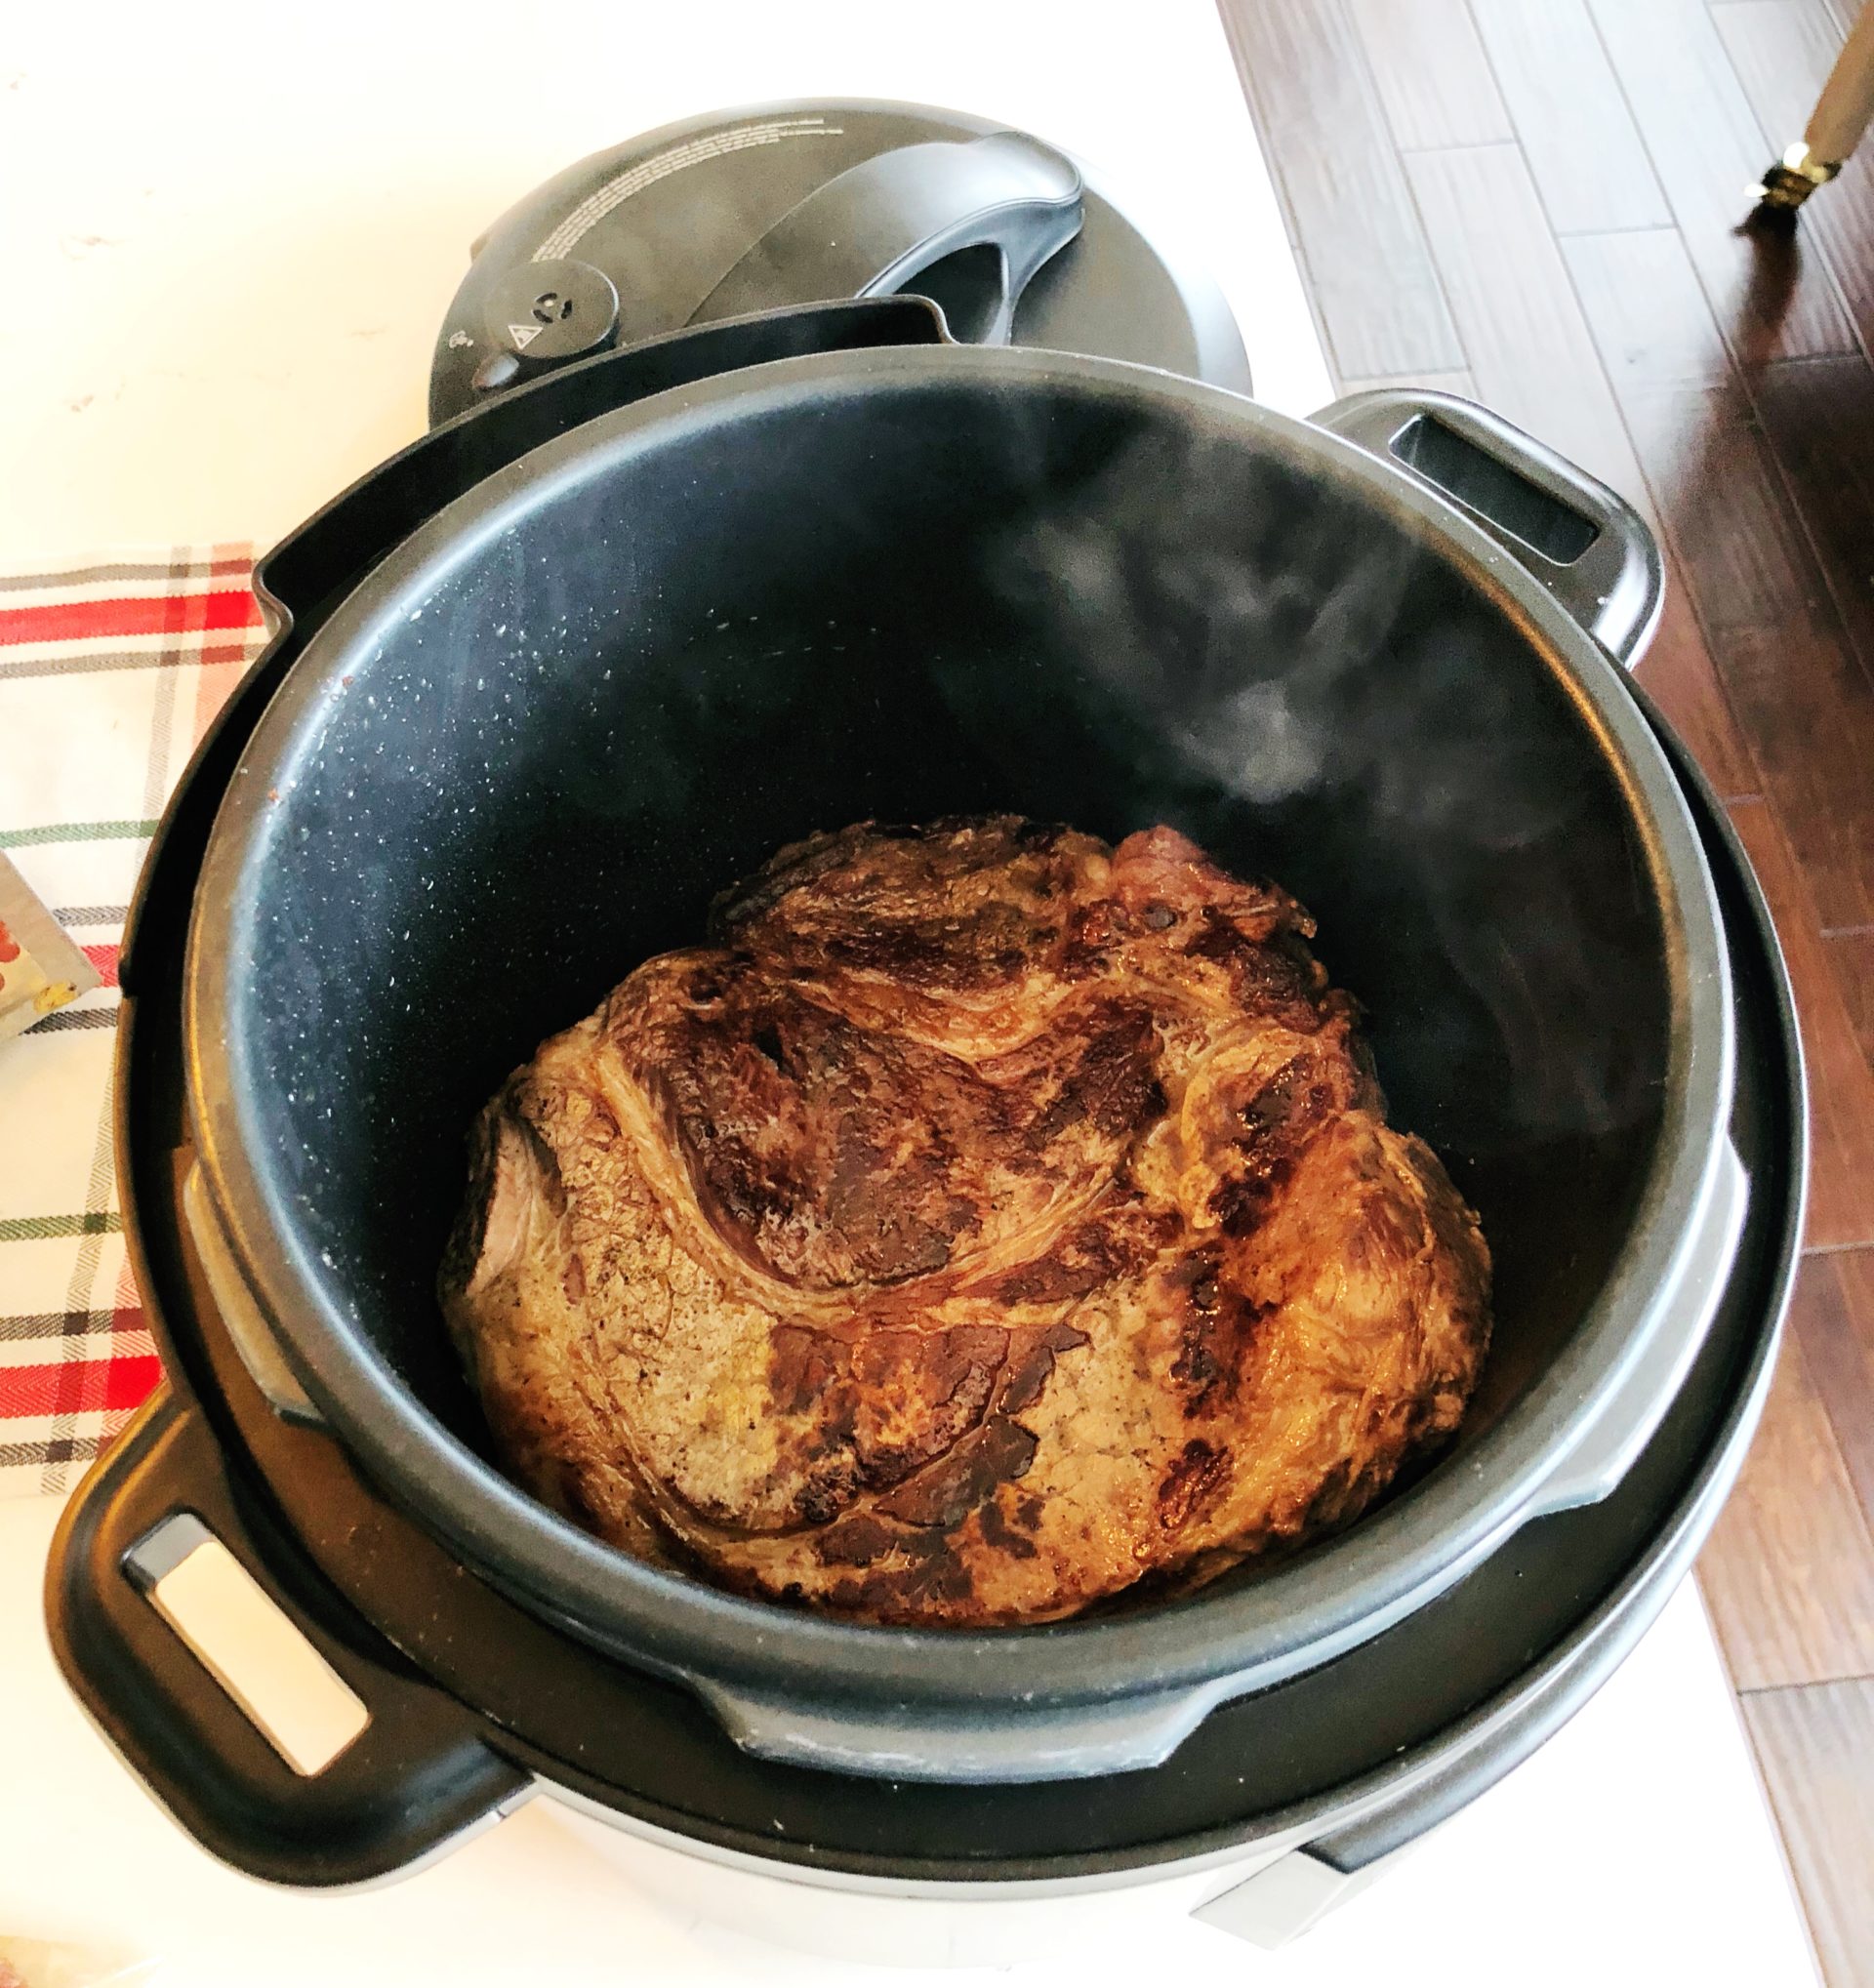 Pressure Cooker Pot Roast in the Crock-Pot® Express Crock Multi Cooker!